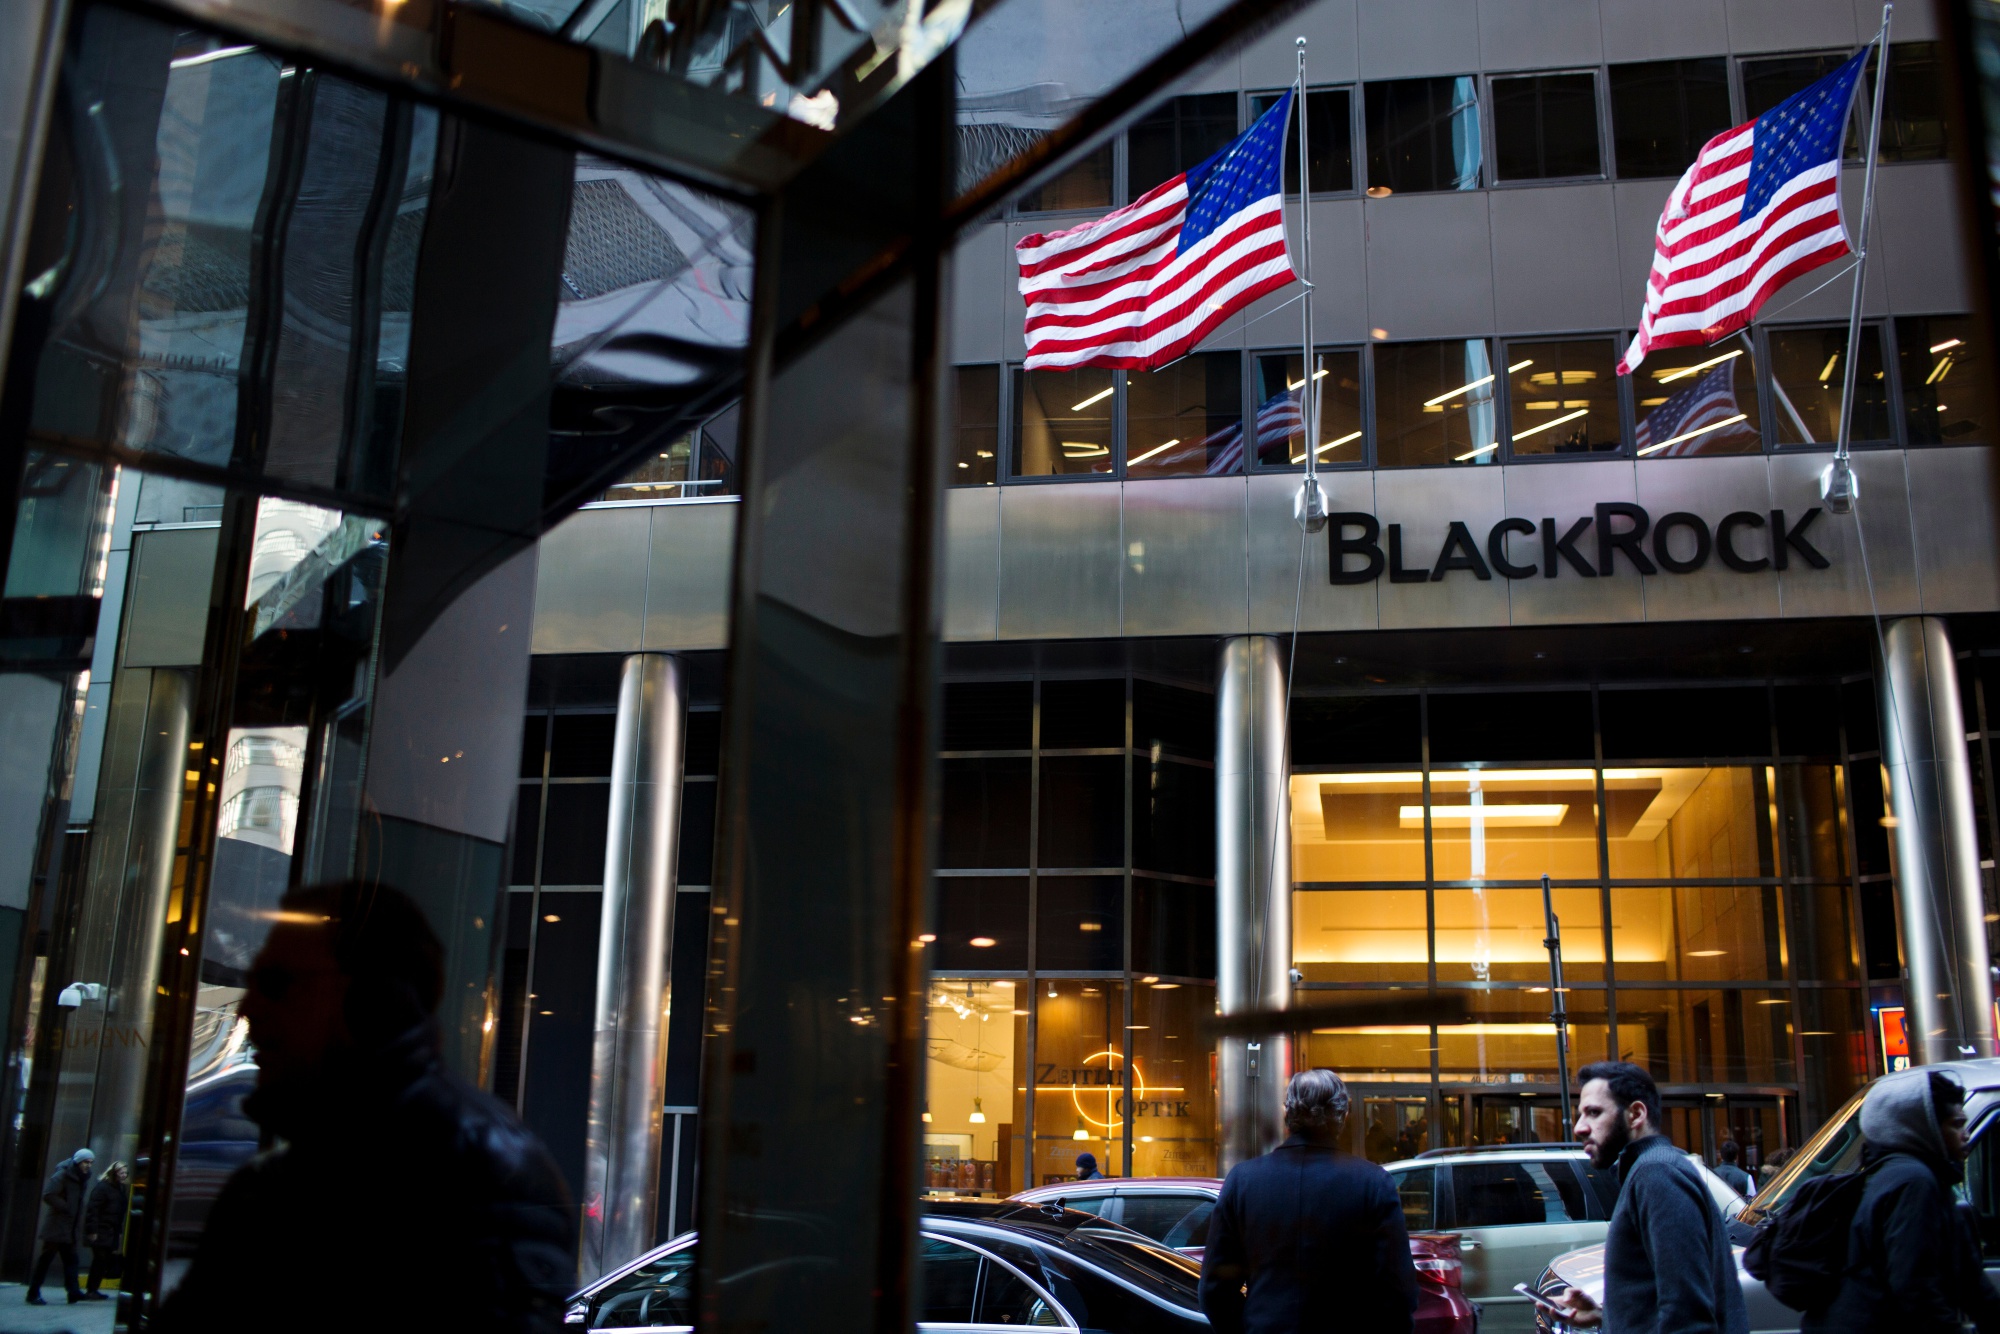 Blackrock Tops Blackrock As Cheap Etf Surpasses Pricier Fund Bloomberg